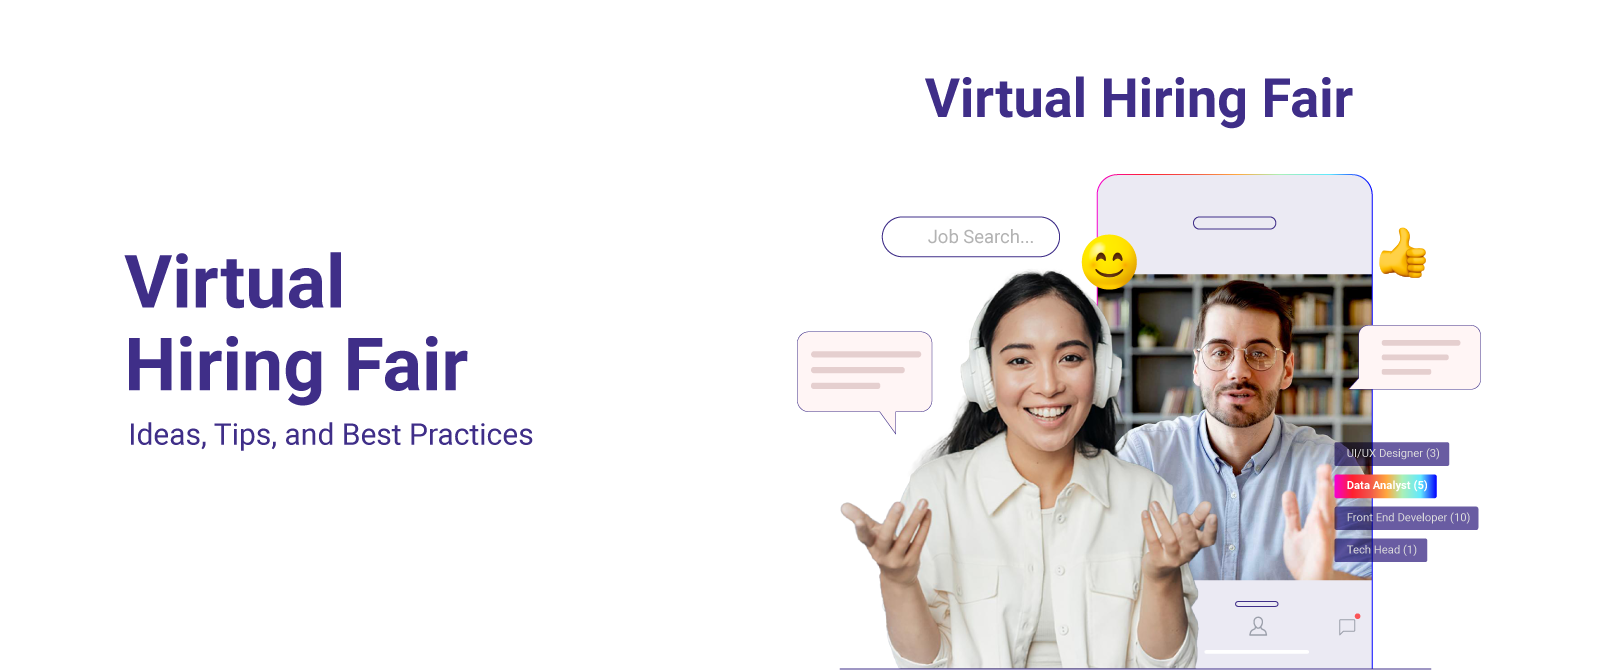 Virtual Hiring Fair – Ideas, Tips, and Best Practices